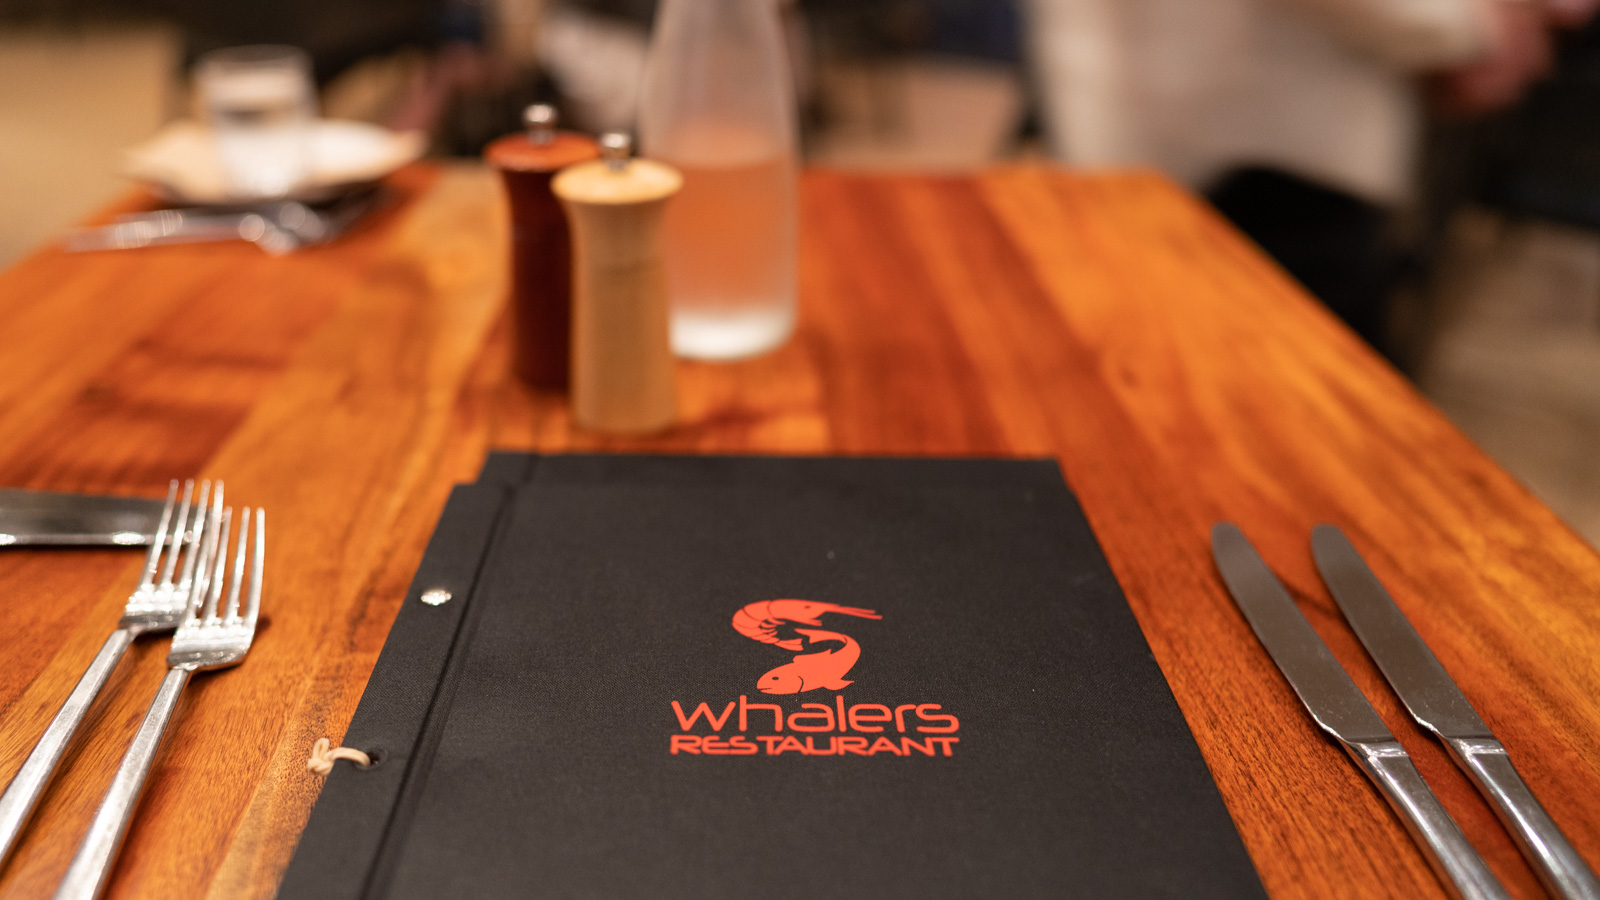 Dinner menu at Whalers